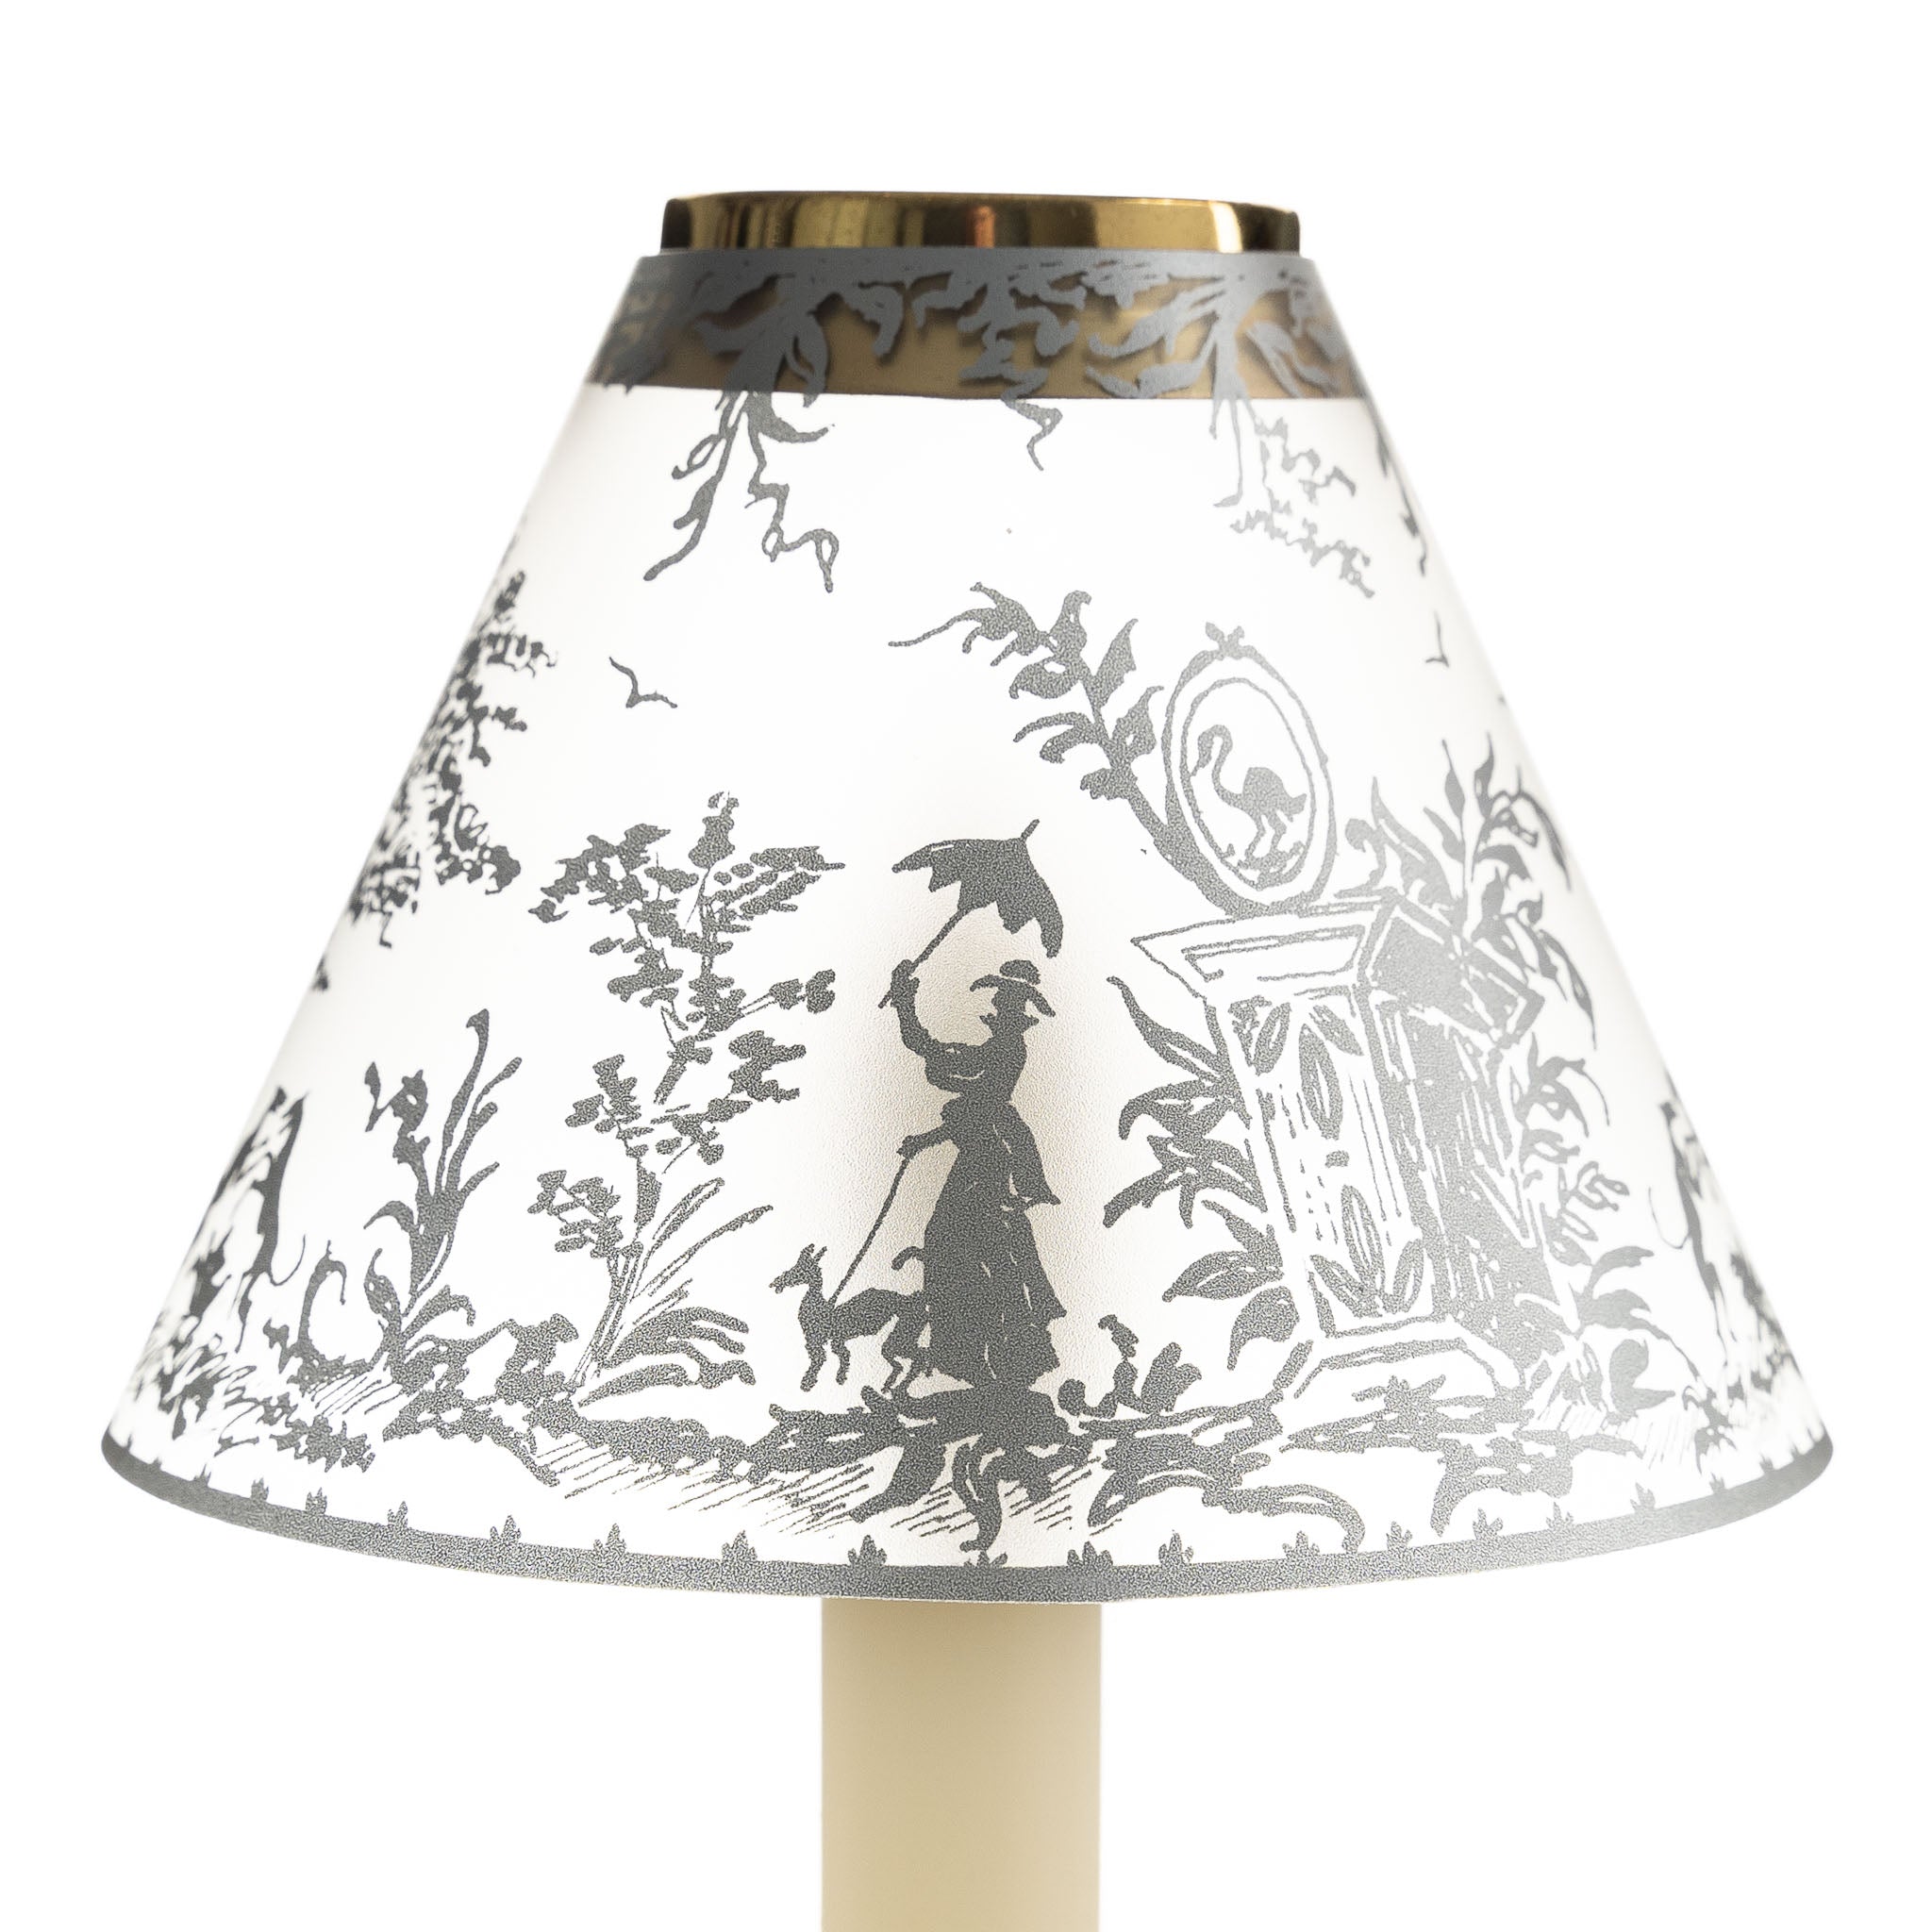 Translucent Candle Shade - Silver 18th Century Design | Nicholas Engert Interiors